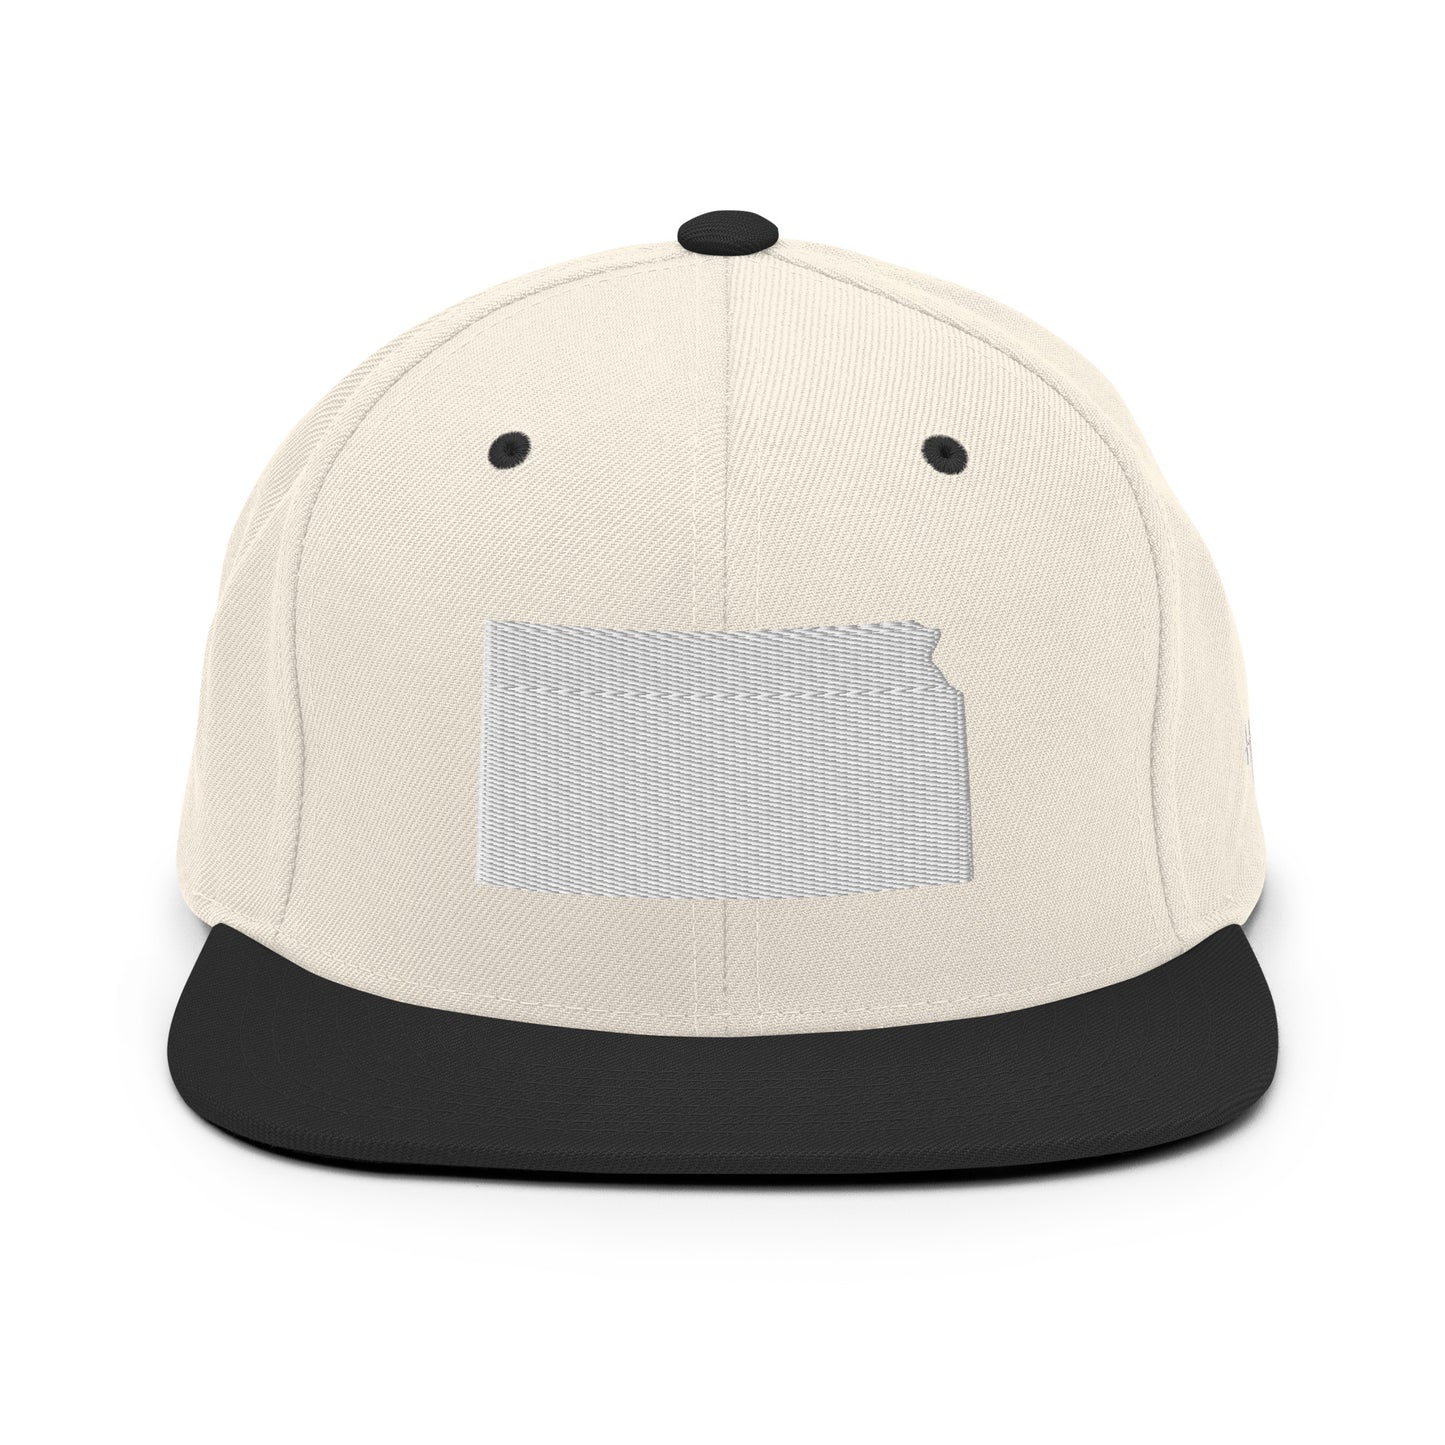 Kansas State Silhouette 6 Panel Snapback Hat